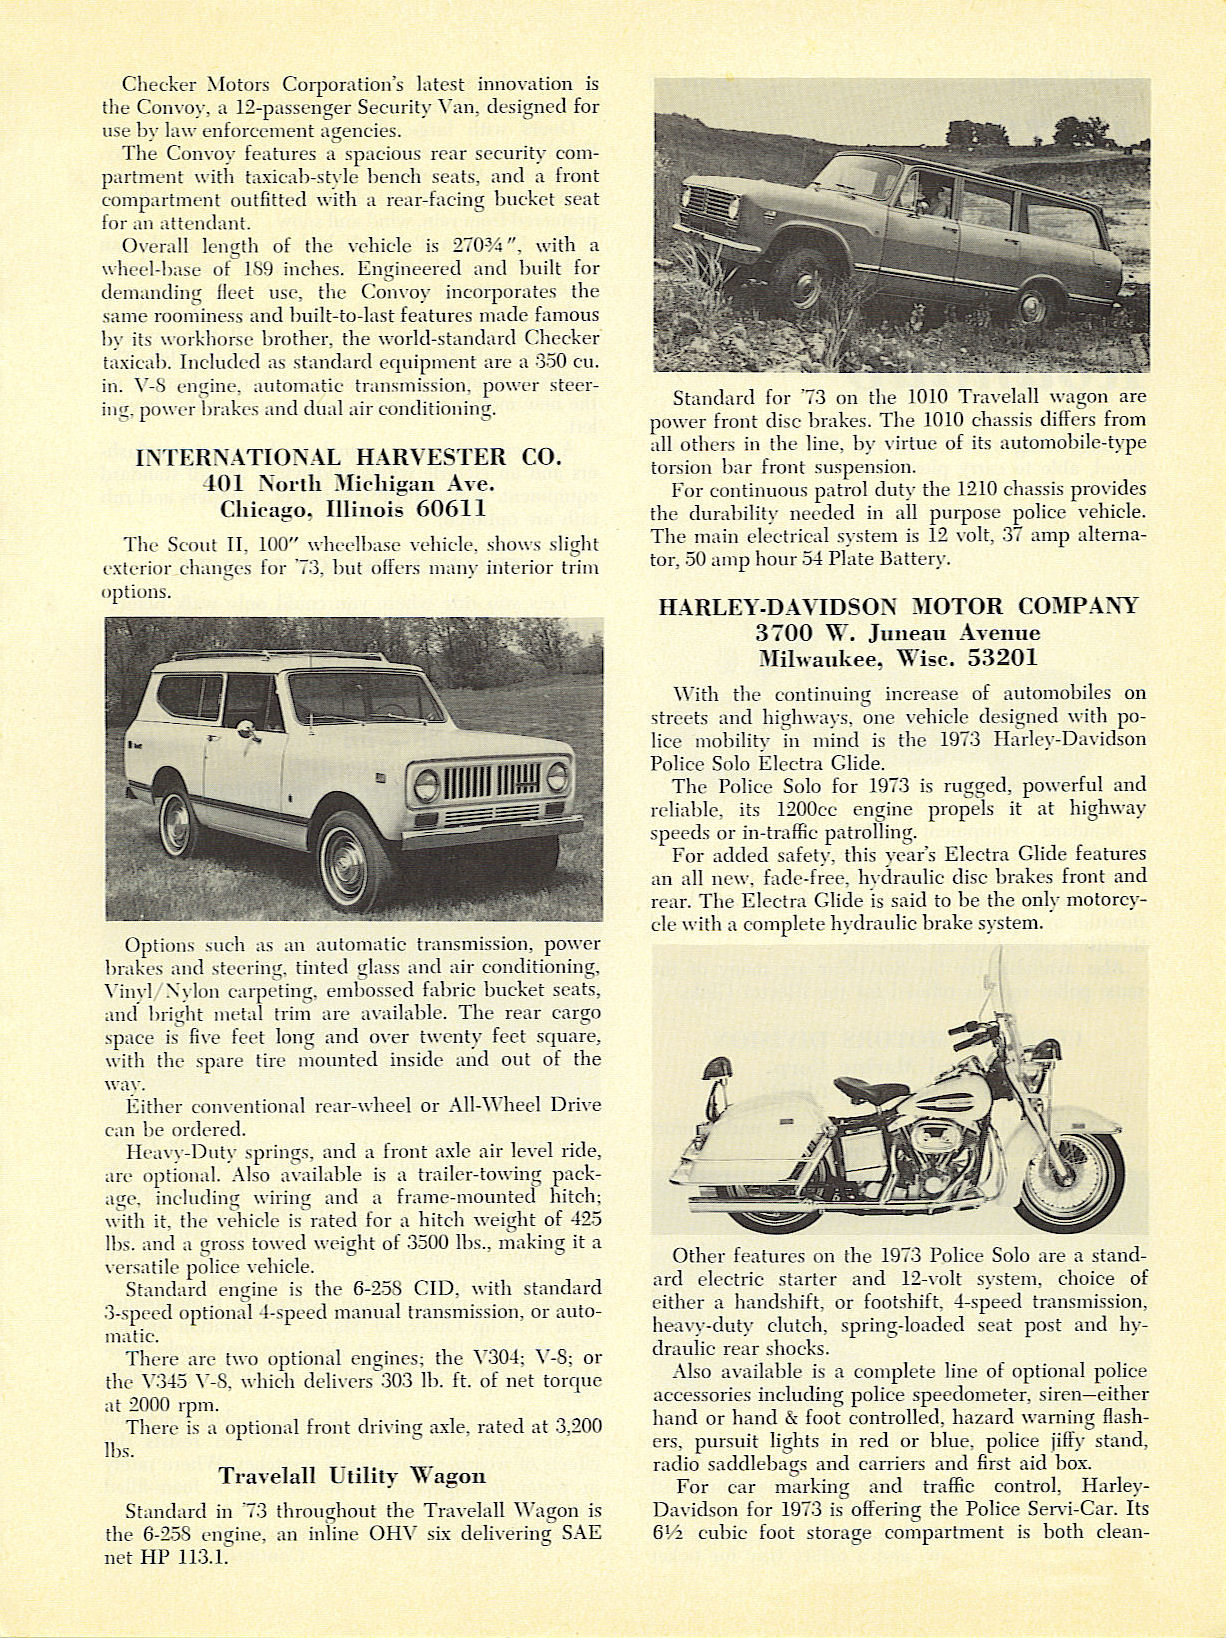 1973_Police_Vehicles-07